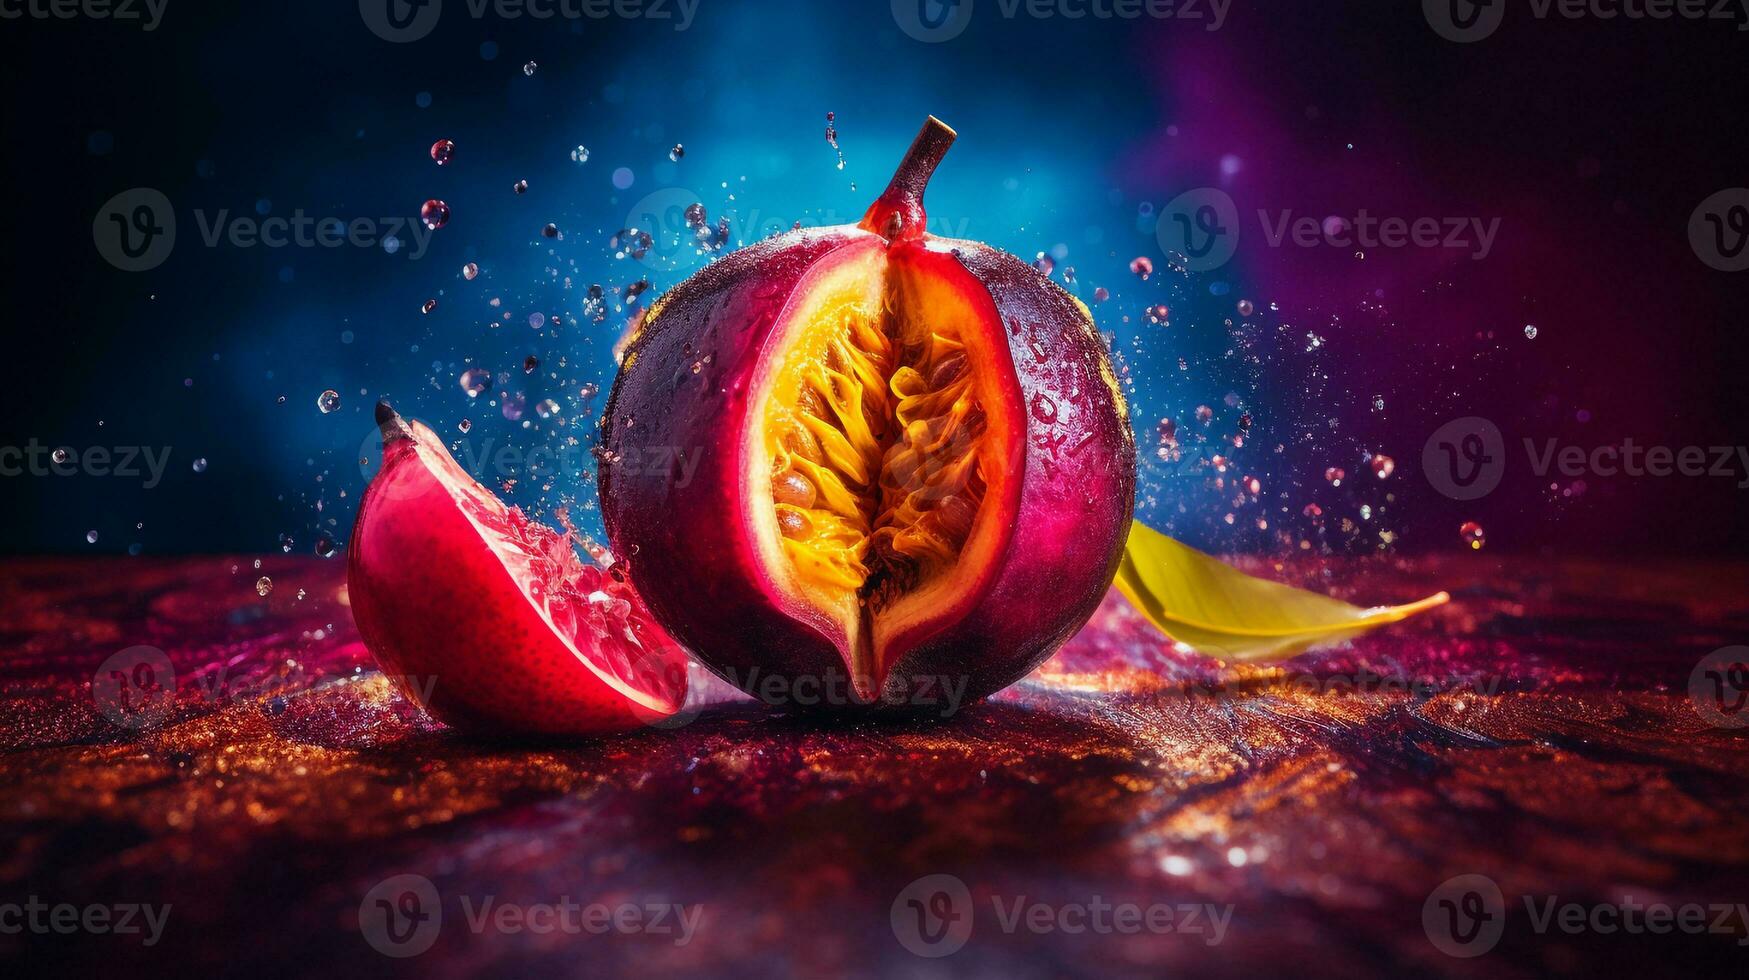 foto do pitomba fruta metade contra uma colorida abstrato fundo. generativo ai